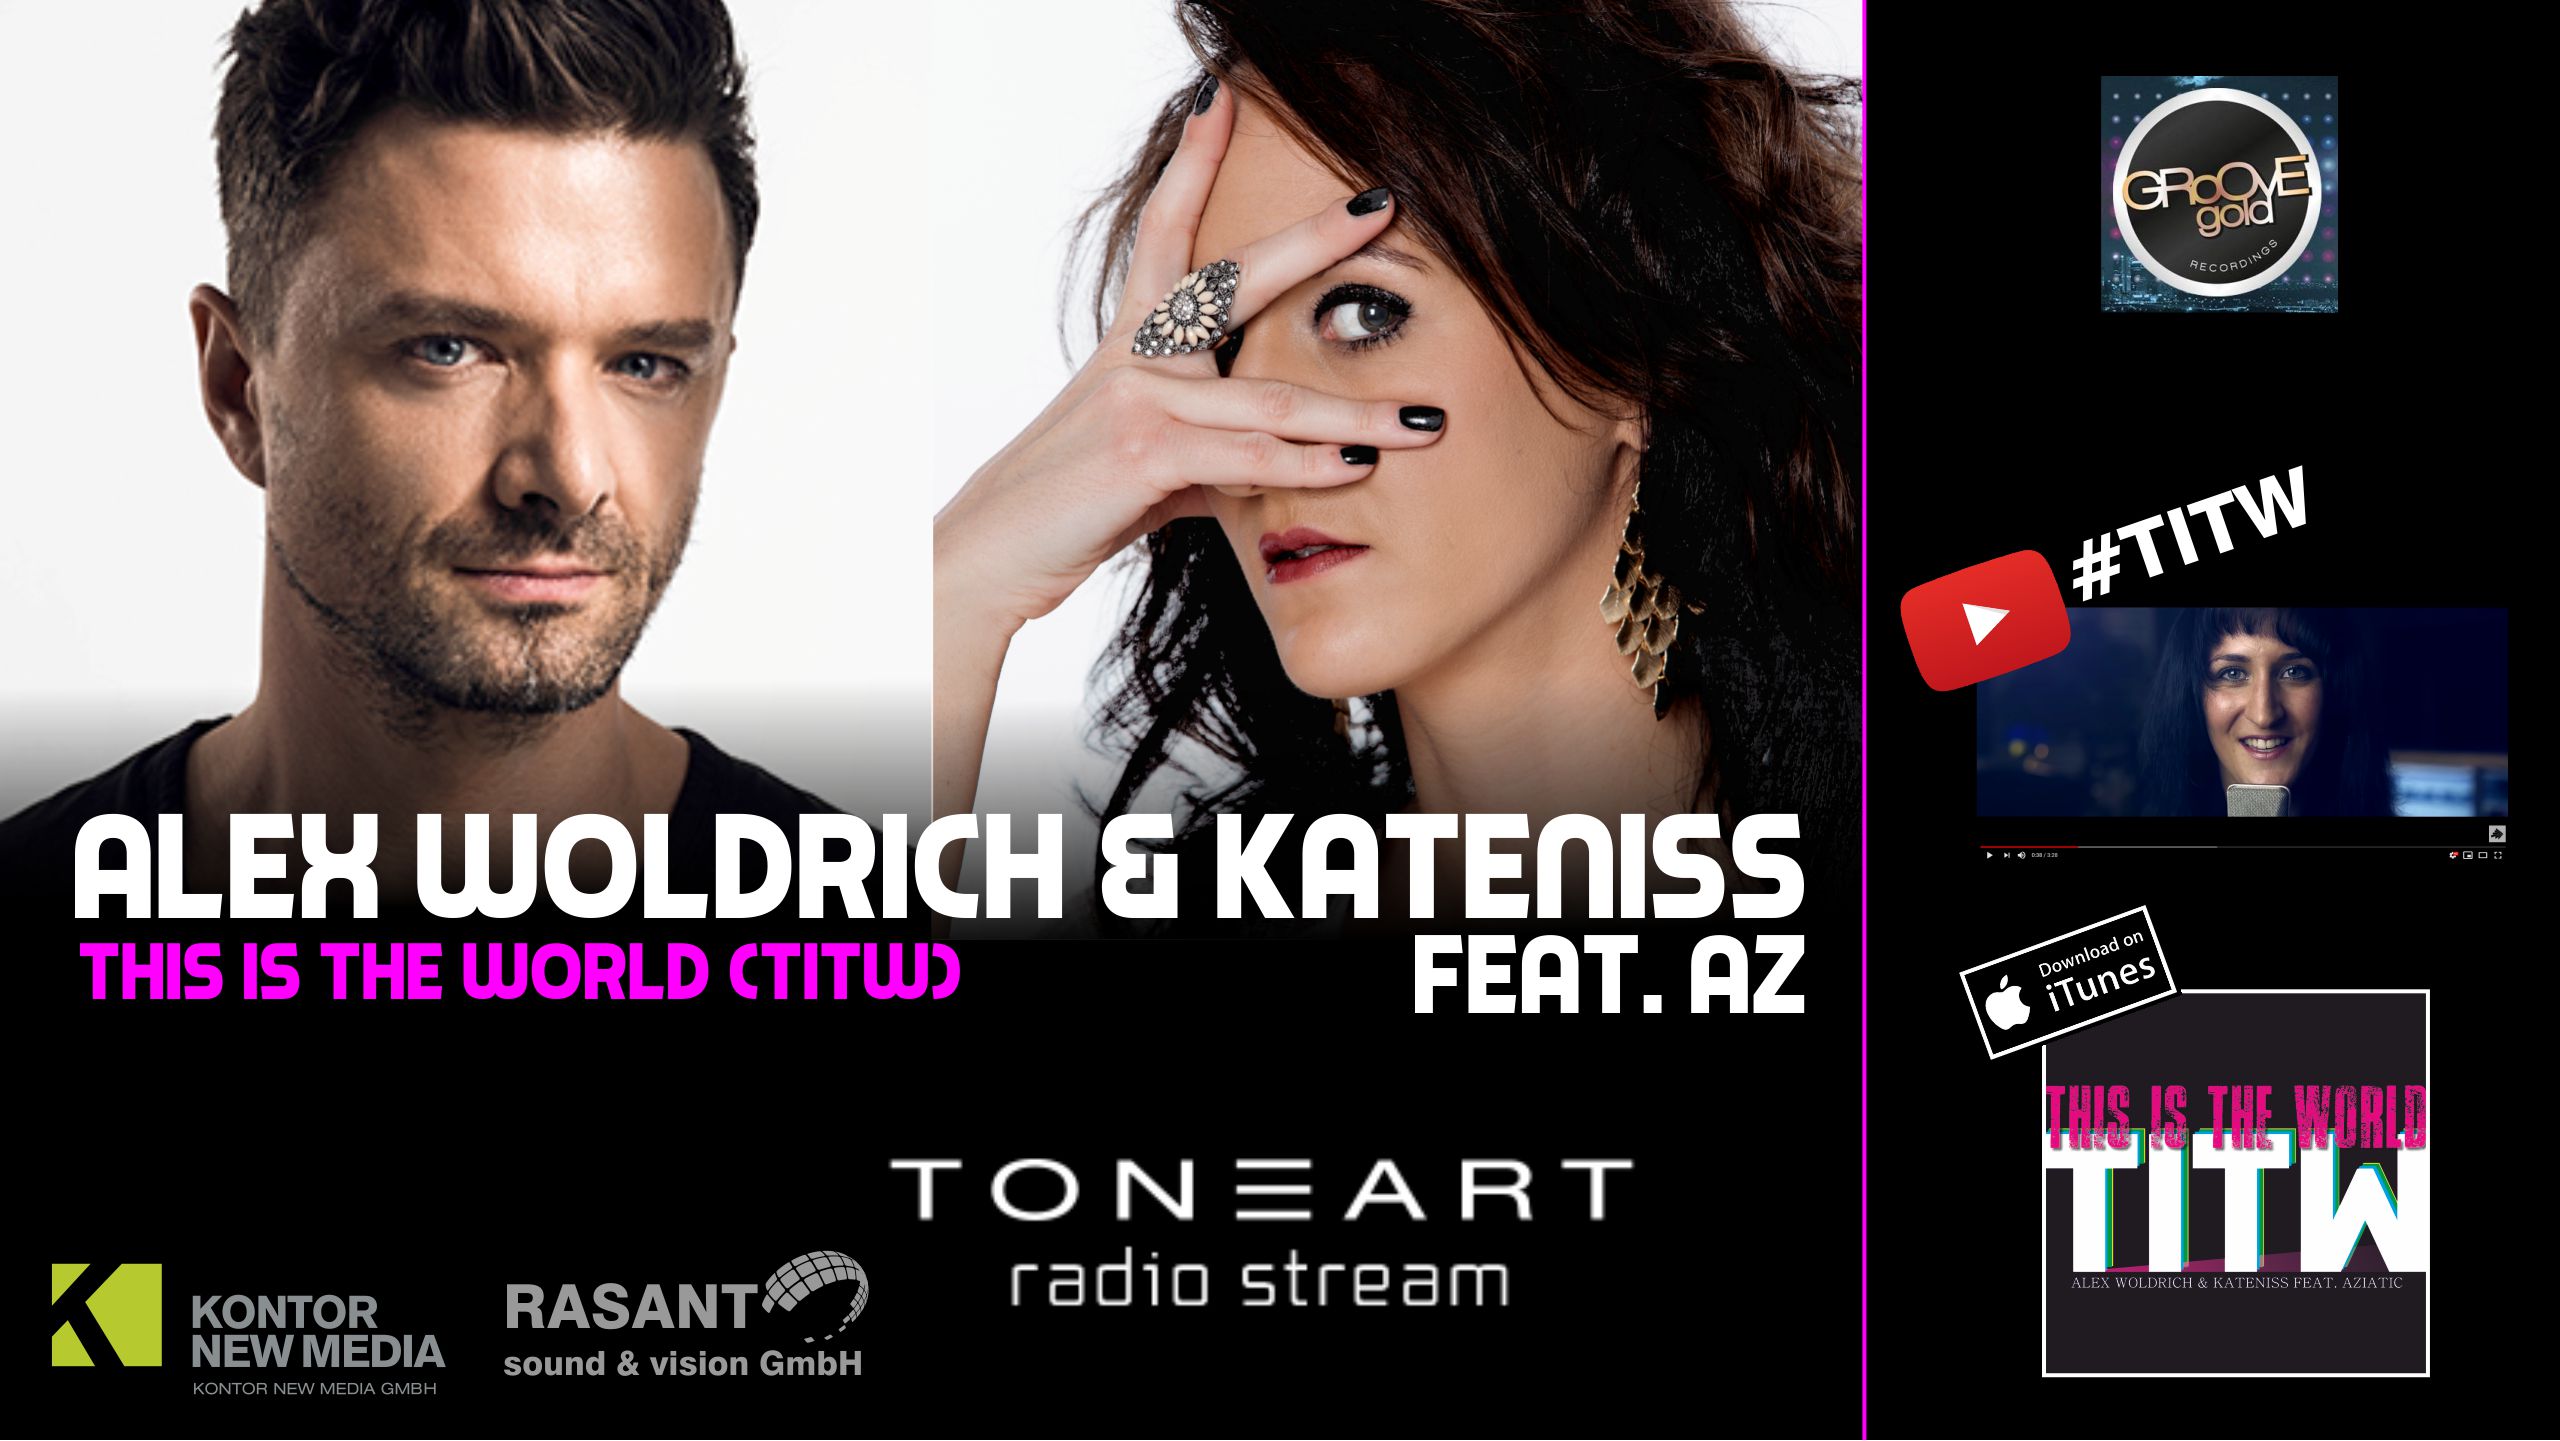 Alek Woldrich & Kateniss feat. AZ - TONEART Radio